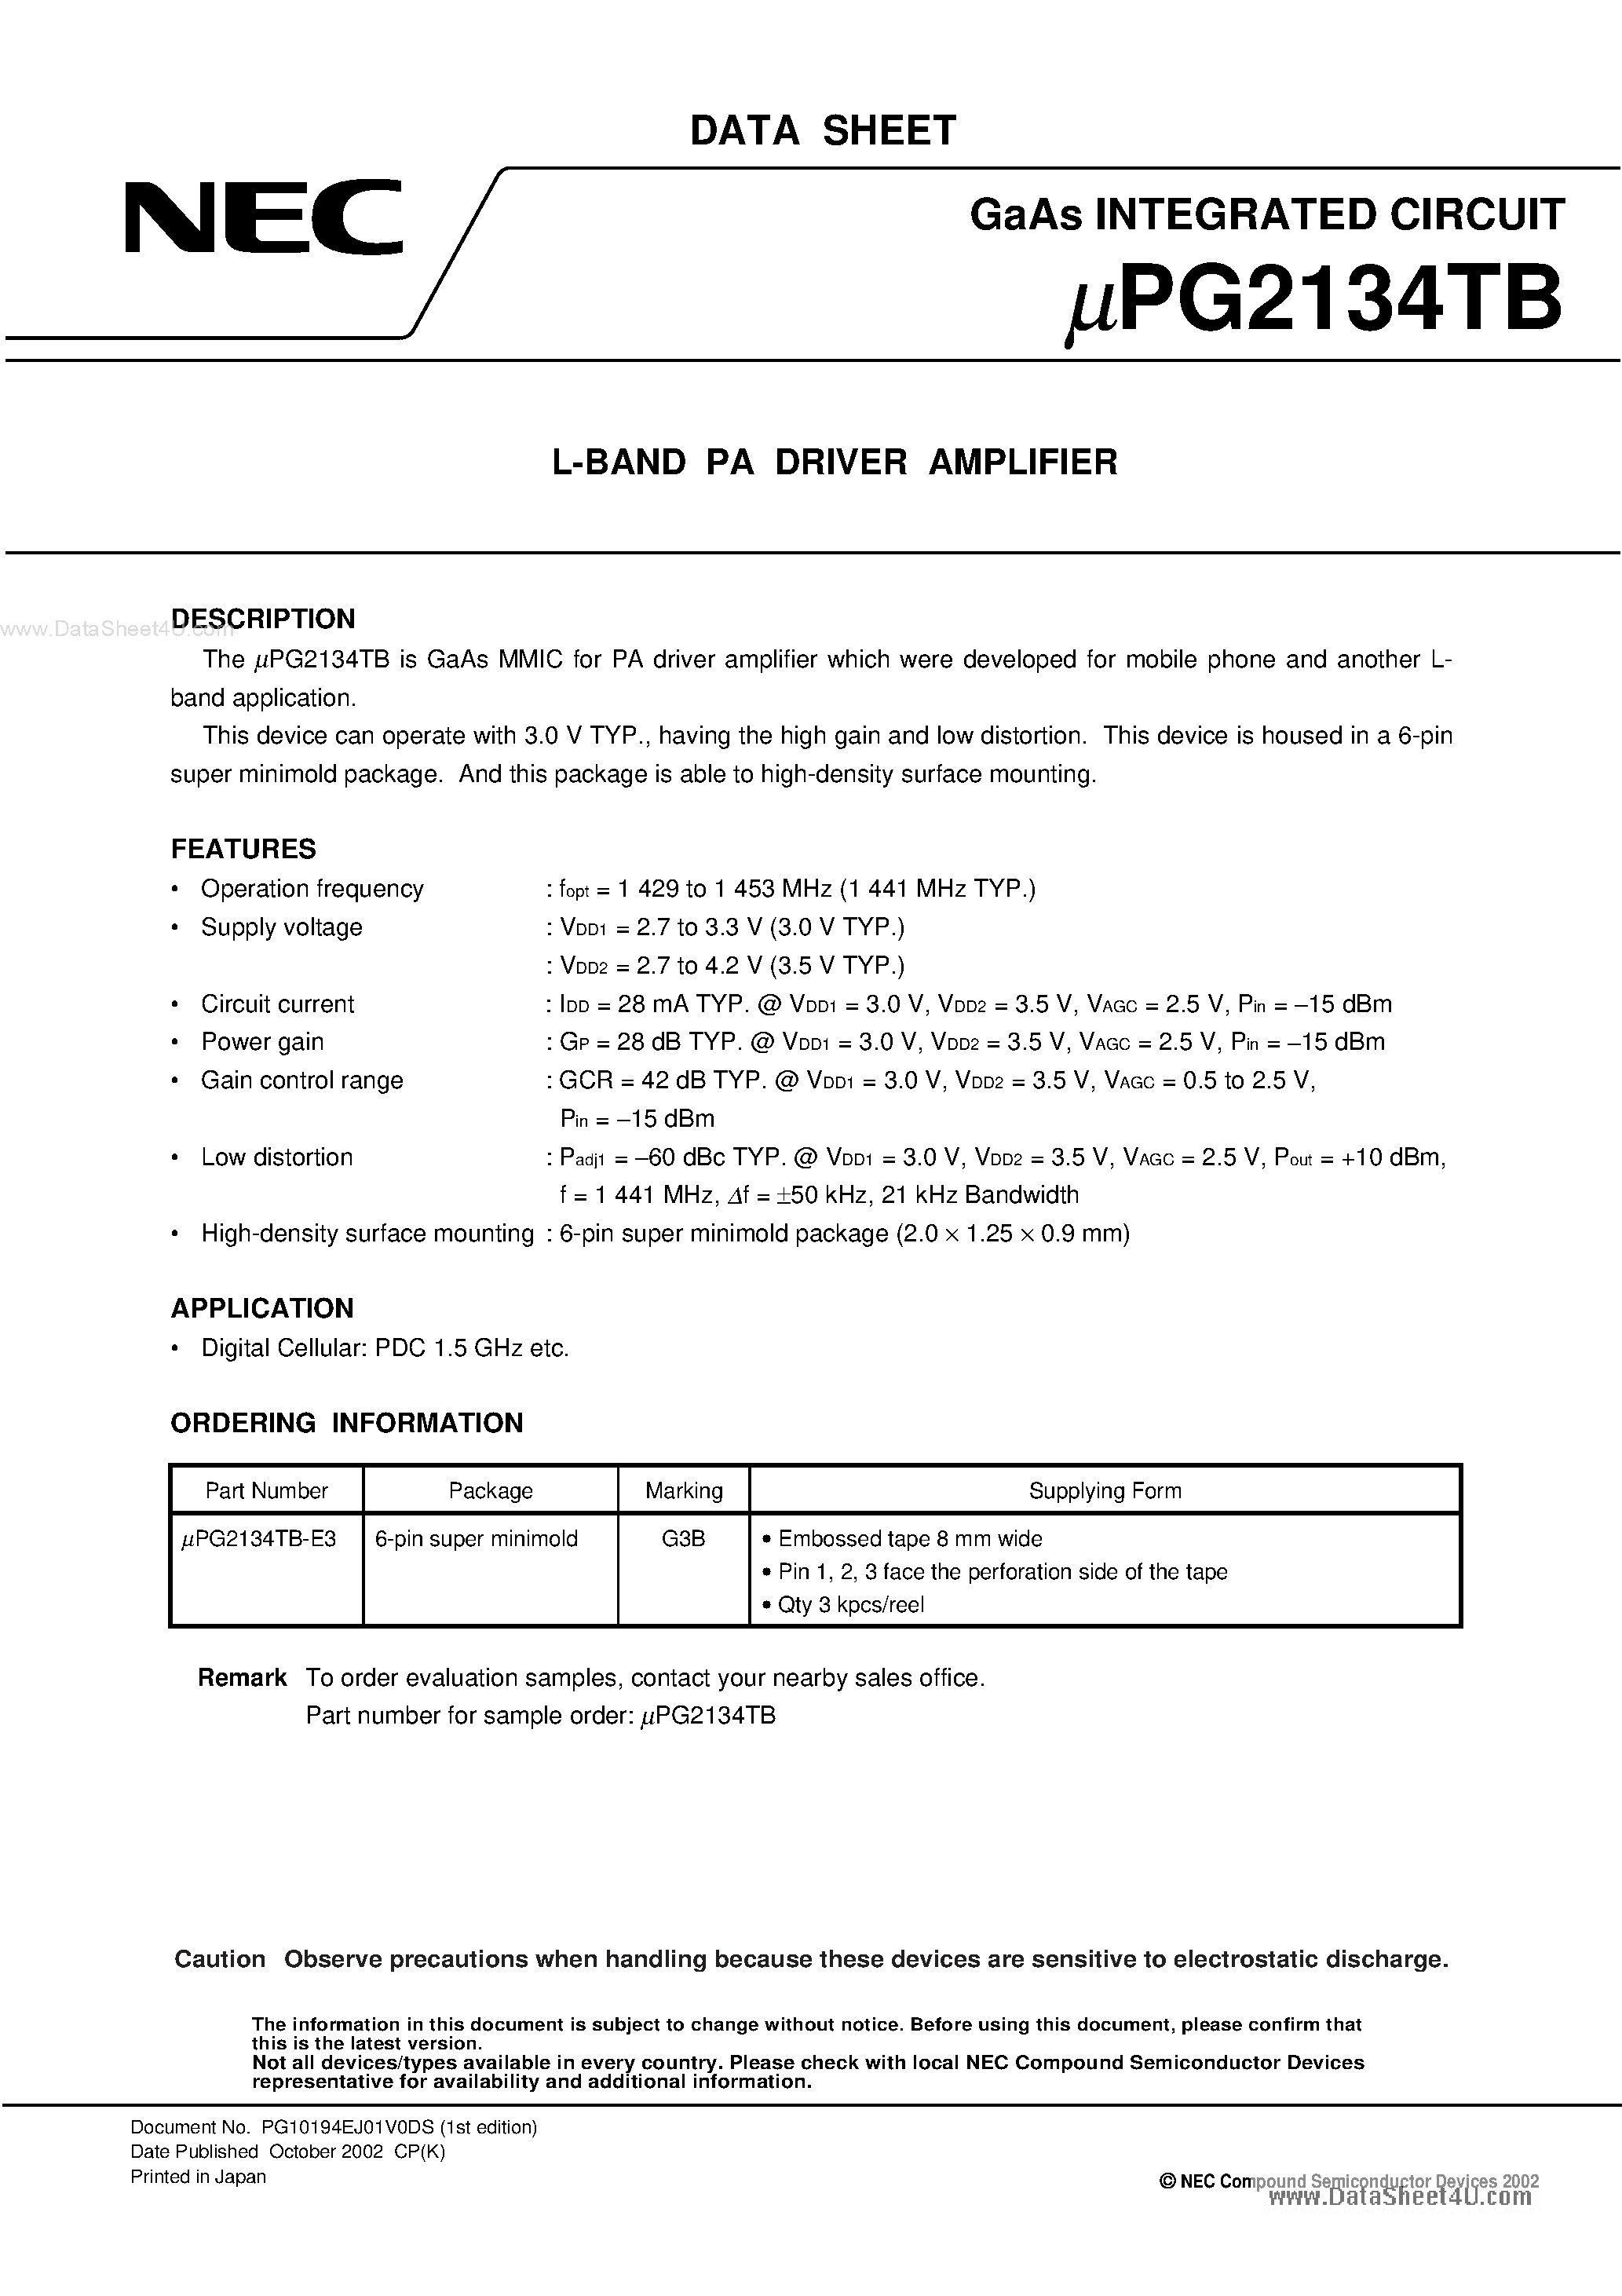 Datasheet UPG2134TB - L-BAND PA DRIVER AMPLIFIER page 1